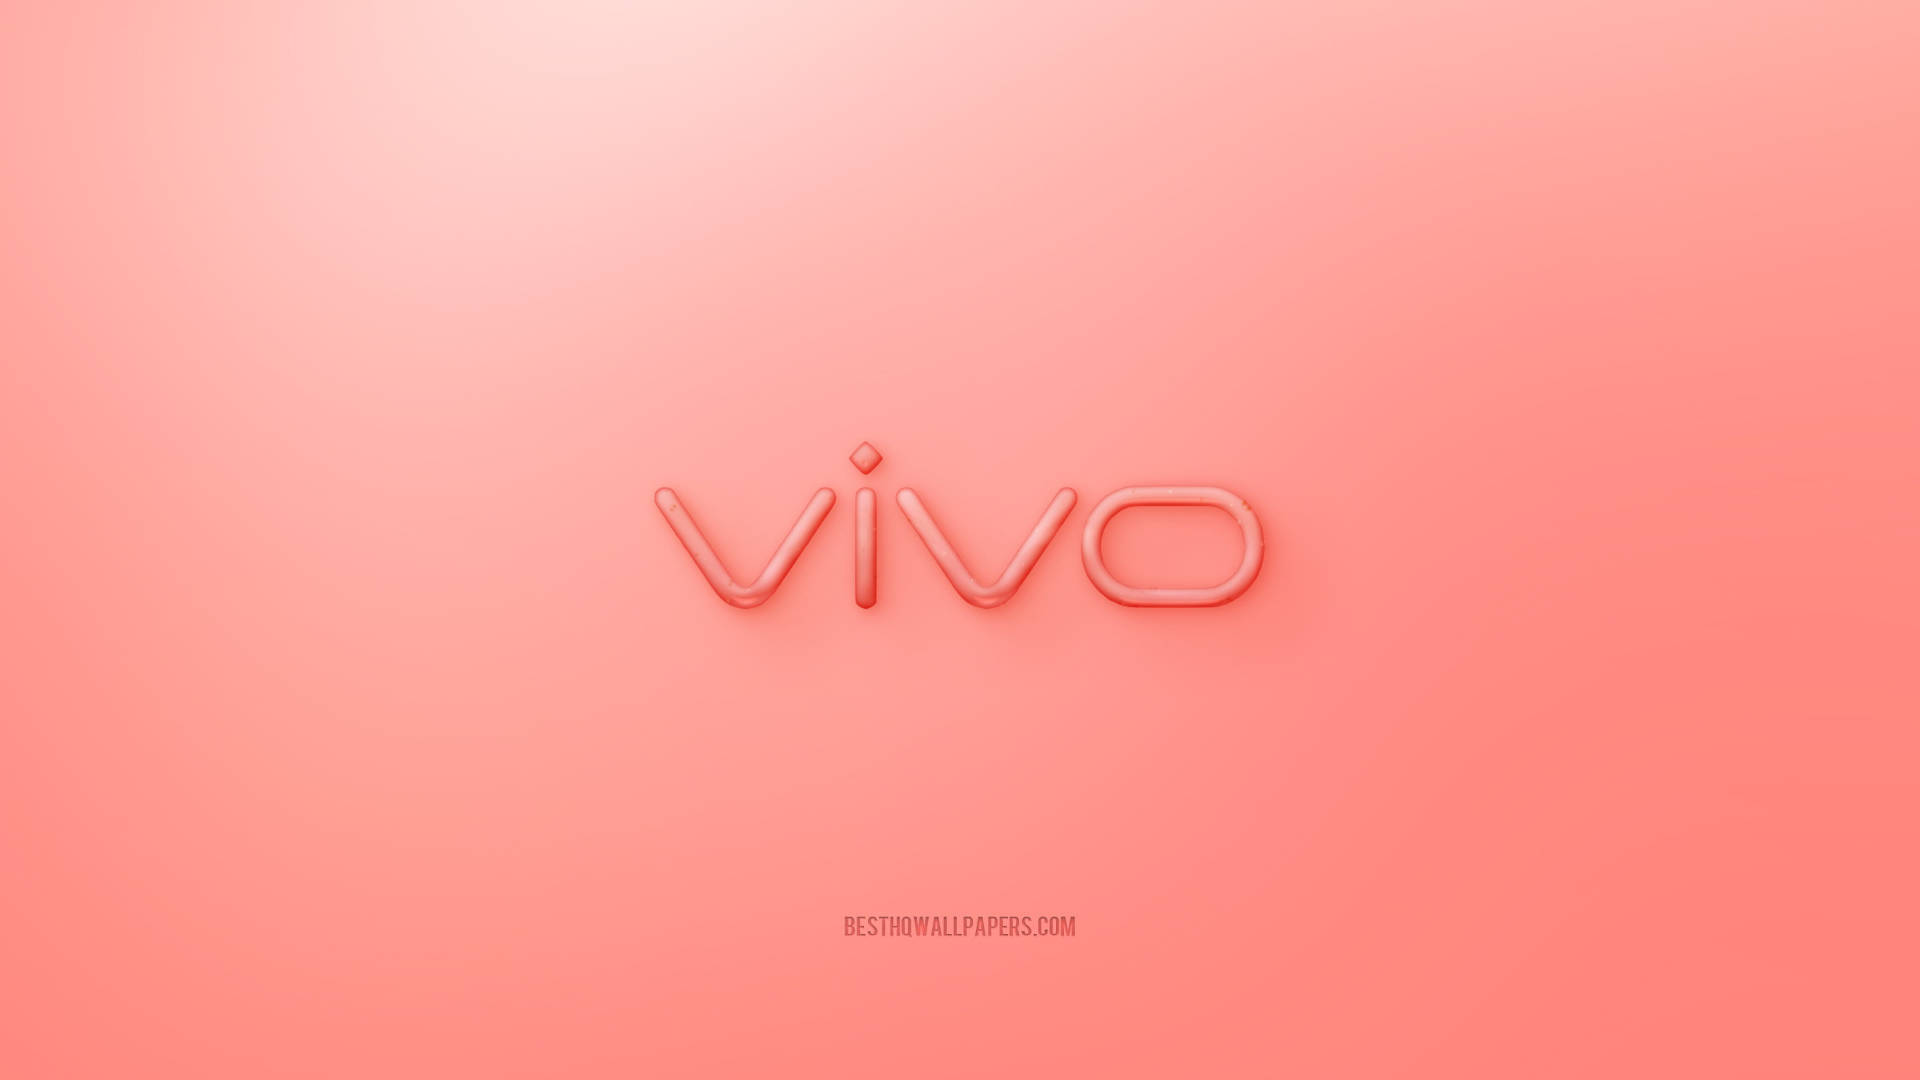 Peach Vivo Logo Wallpaper